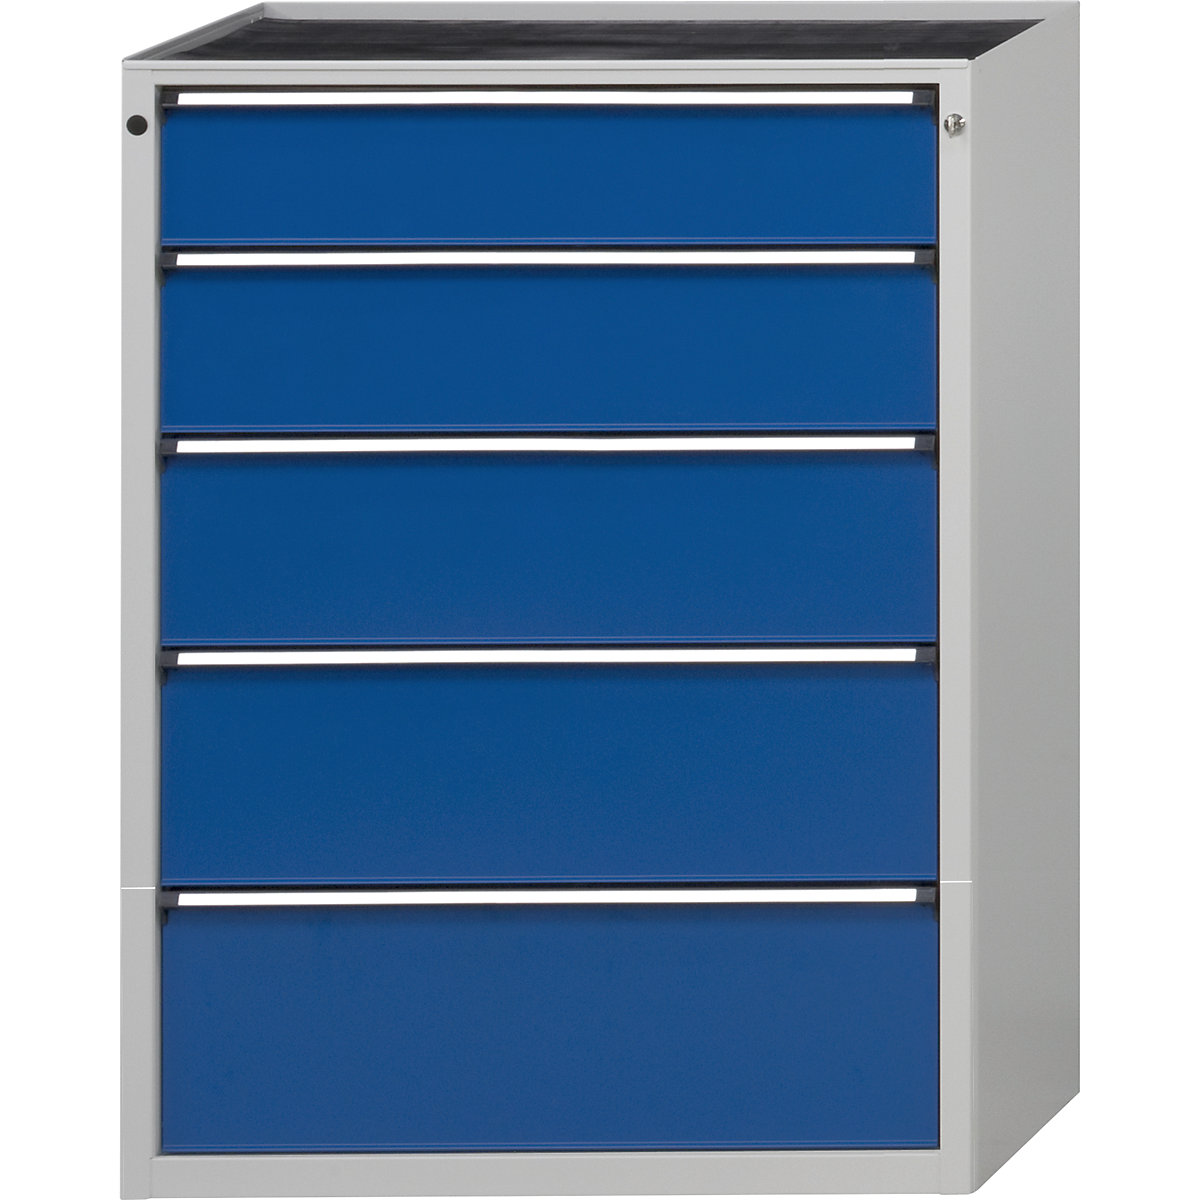 ANKE – Armoire à tiroirs, l x p 910 x 675 mm, 5 tiroirs, hauteur 1280 mm, façade bleu gentiane